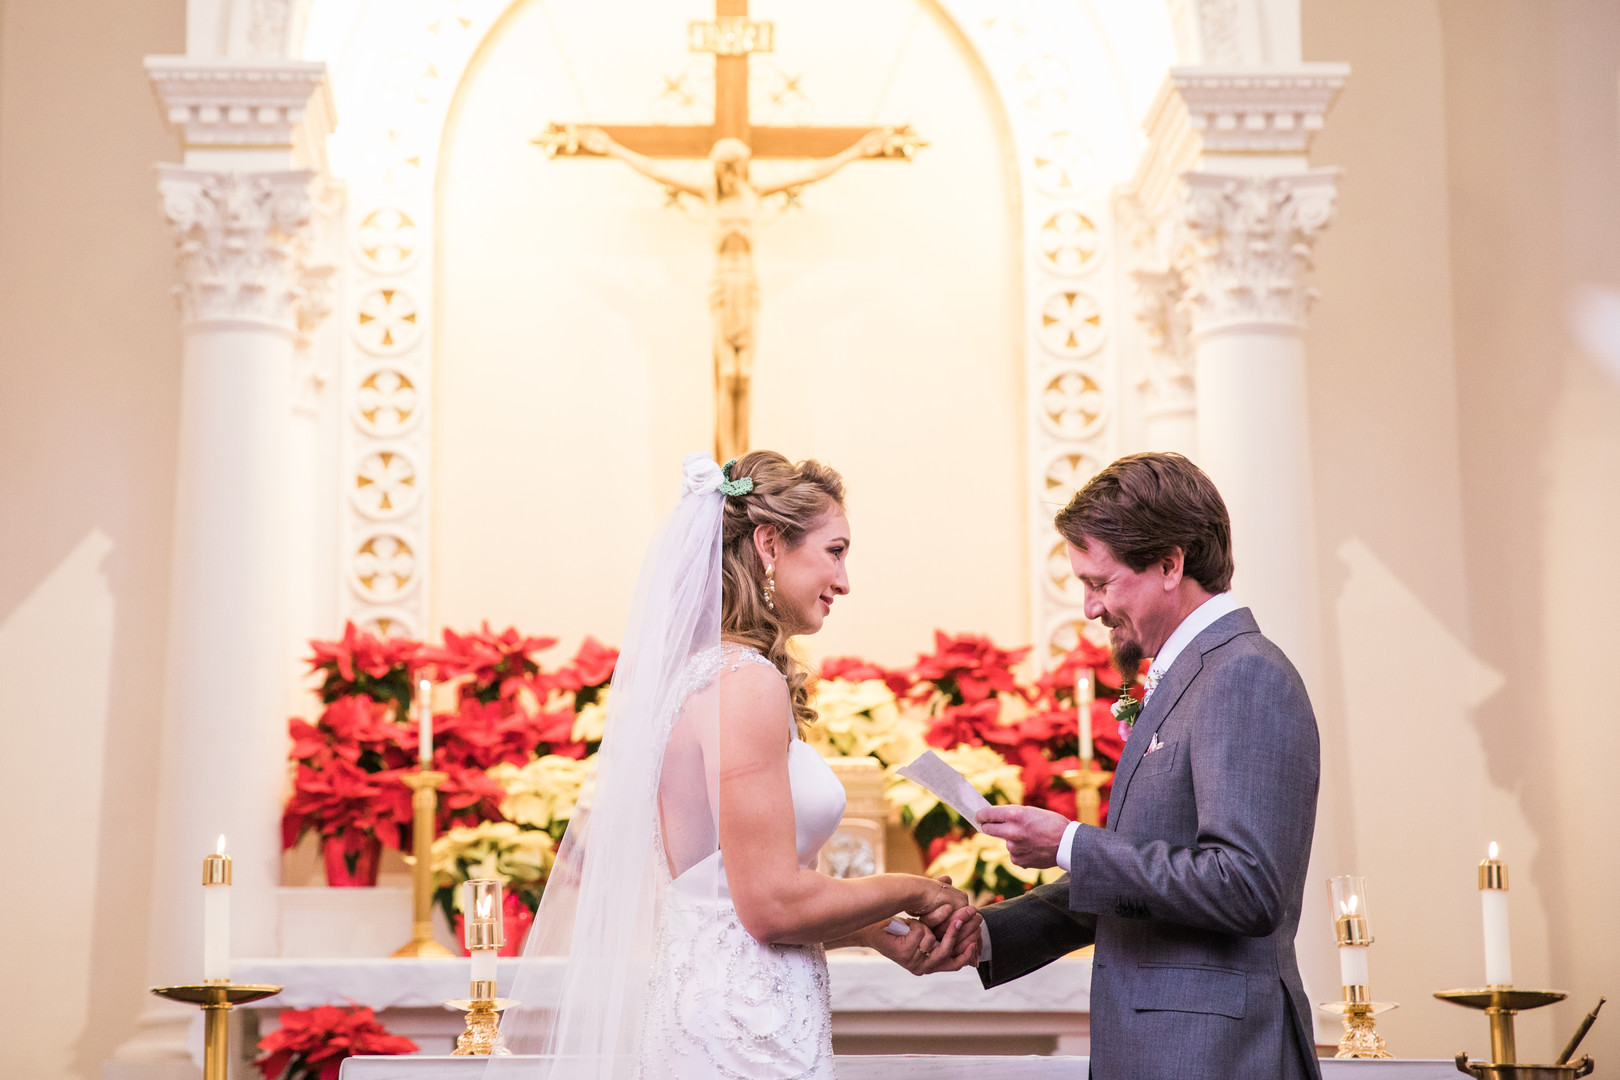 Vintage Inspired Catholic Wedding Vows